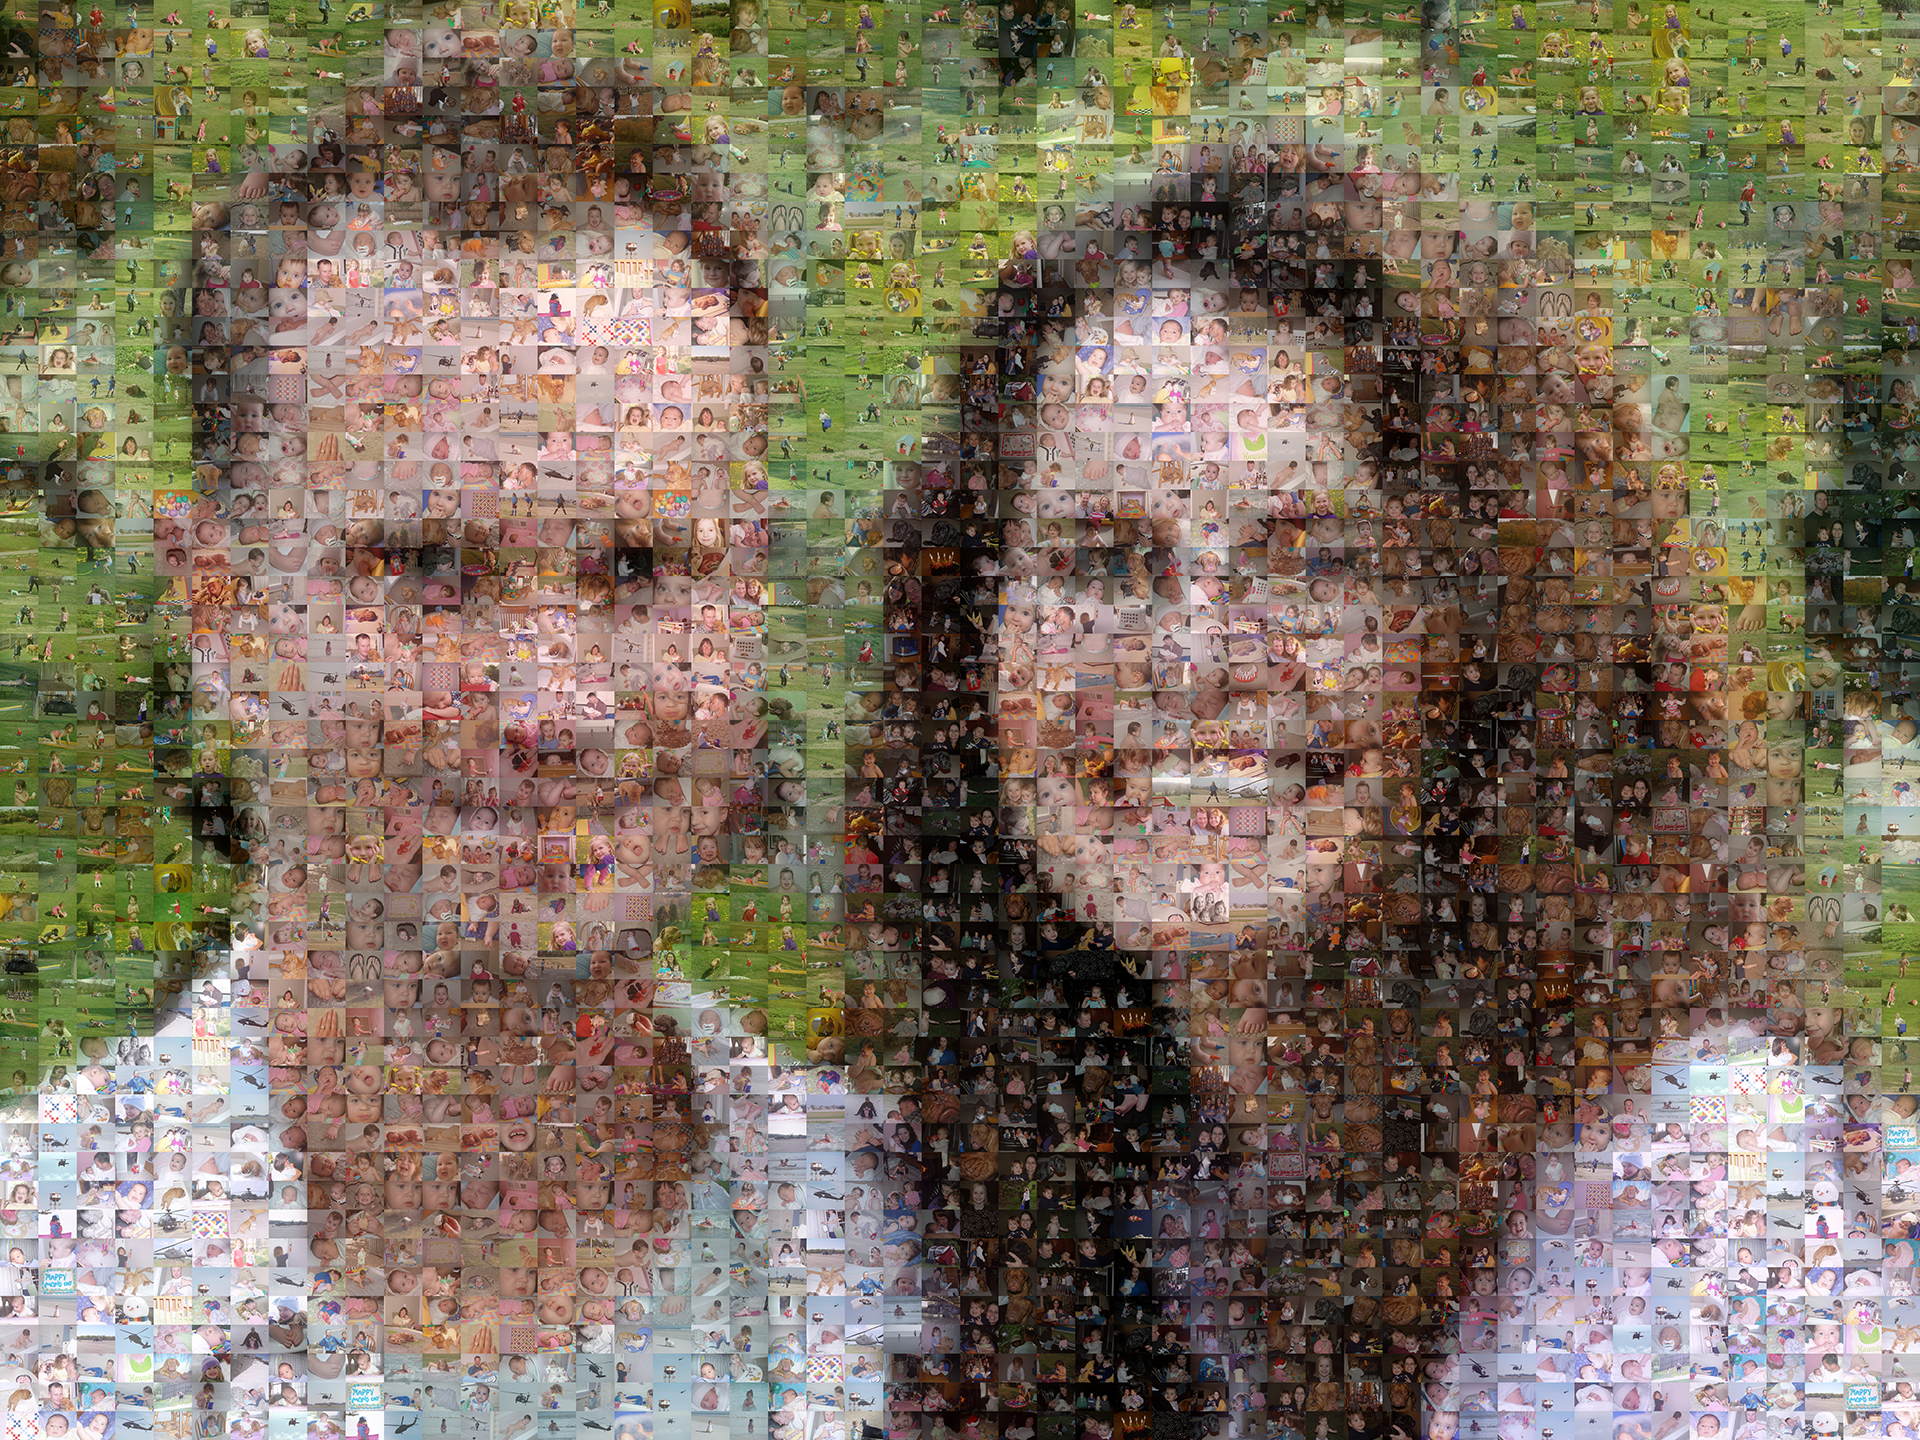 photo mosaic created using over 2400 customer selected photos